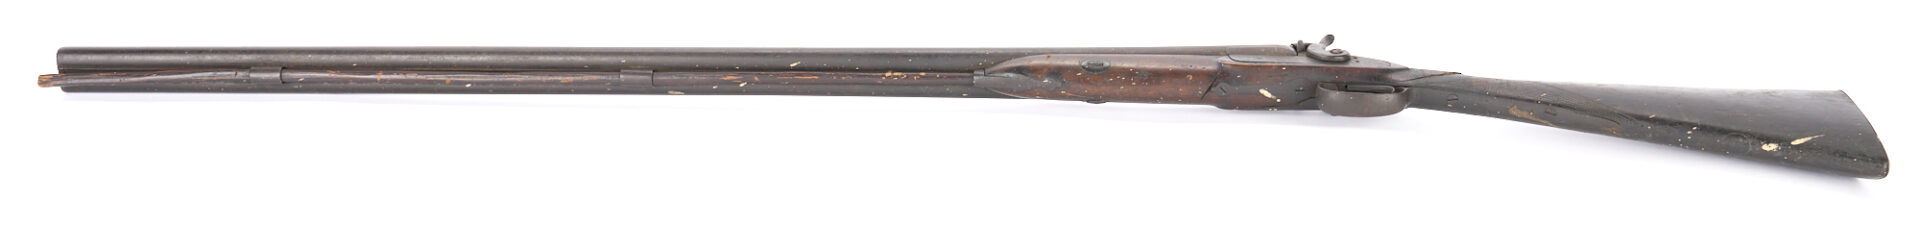 Lot 529: 19th C. Percussion Rifle & Double Barrel Percussion Shotgun; Walter Cline Collection